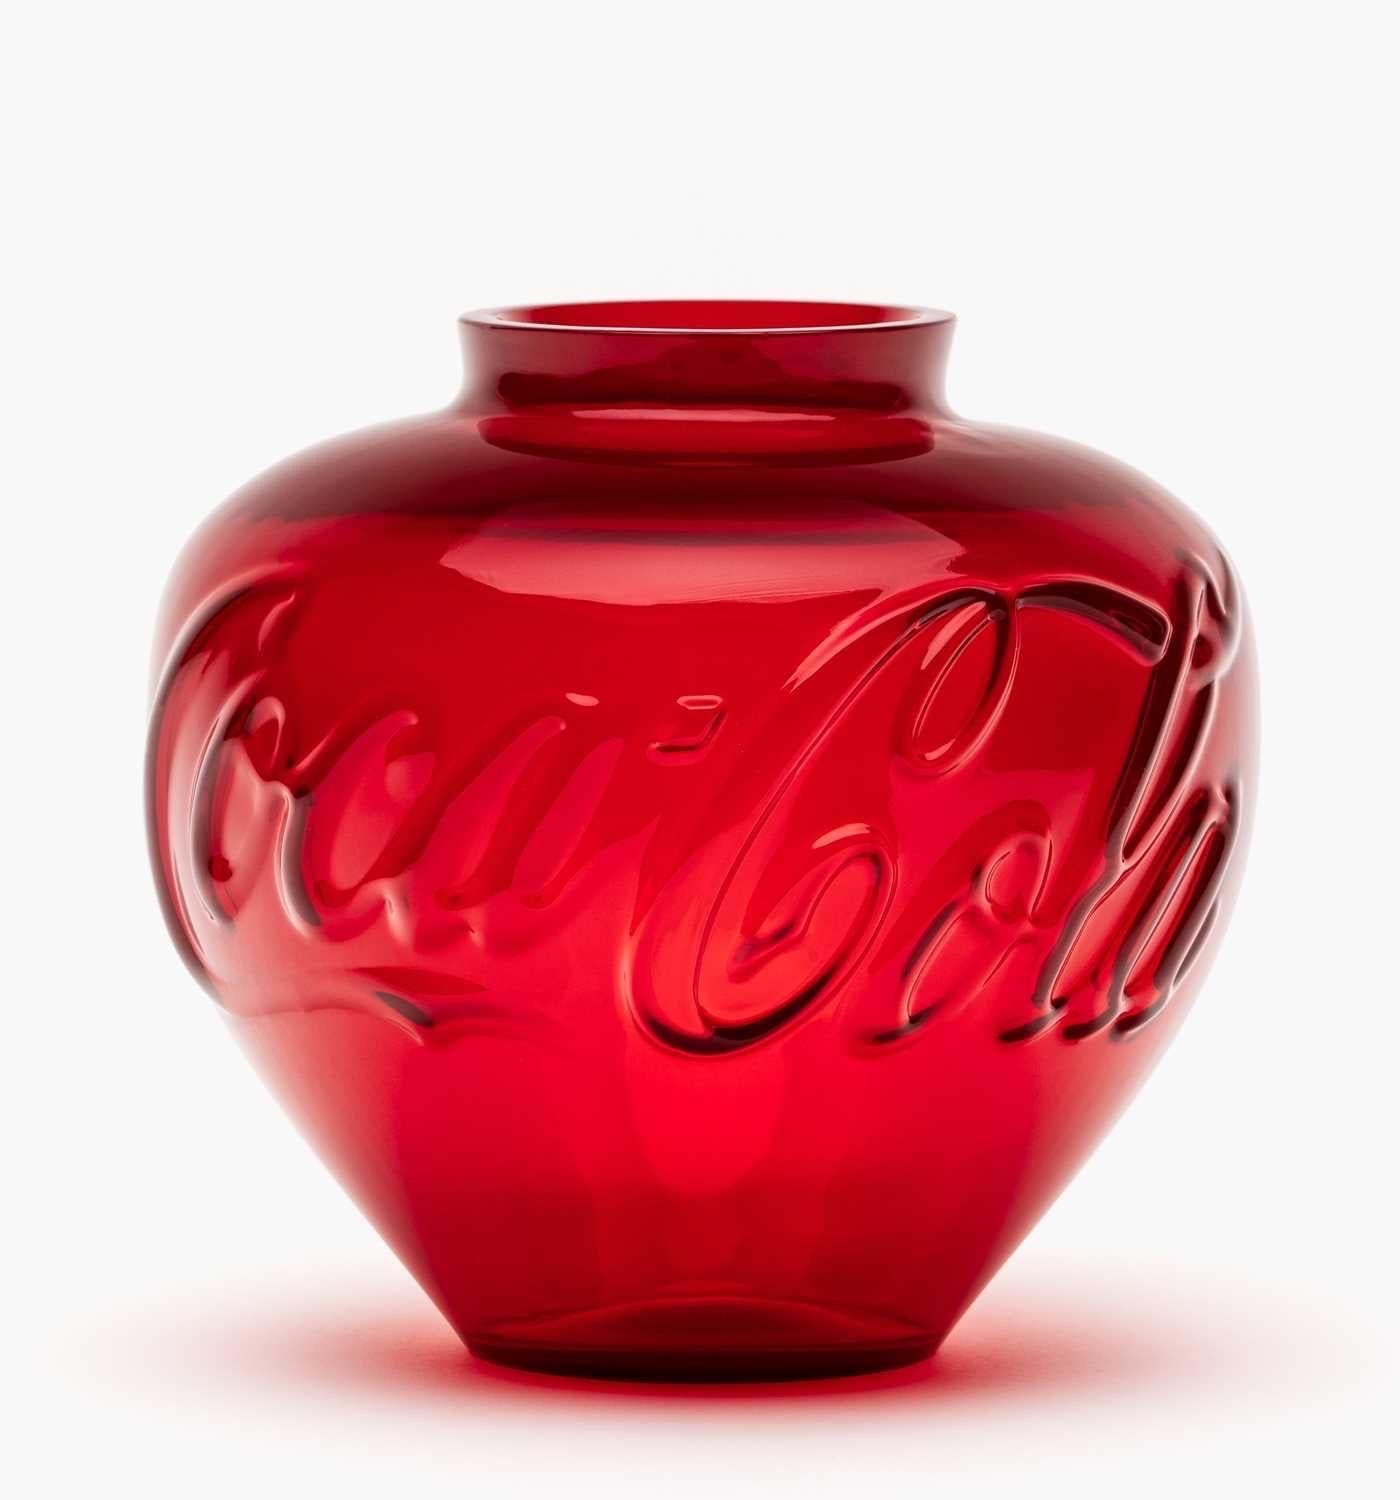 coca-cola vase price